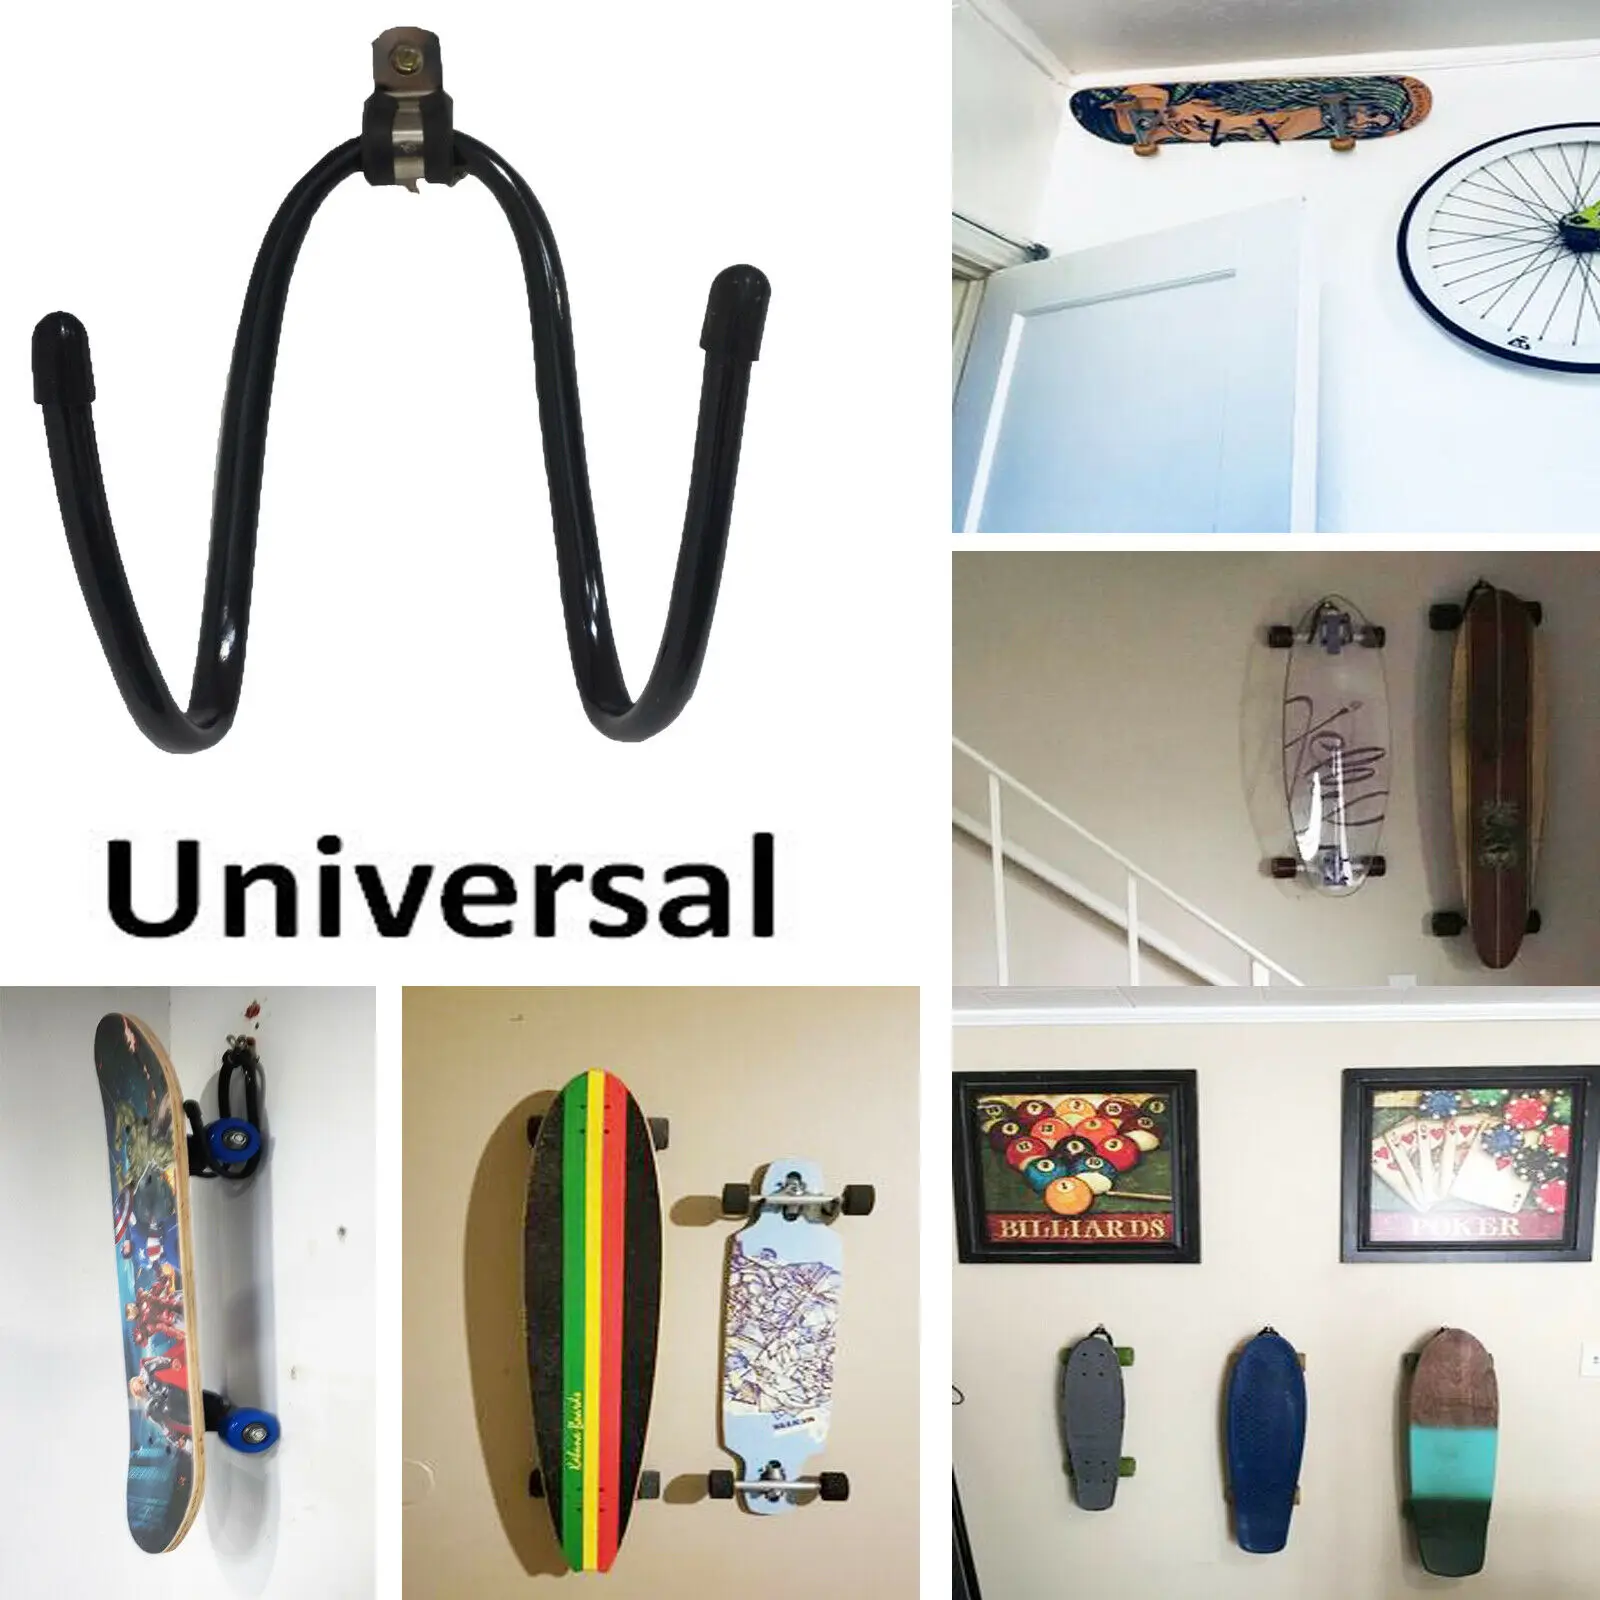 2x Universal Skateboard & Scooter Wall Hanger Rack Mount decks longboard display